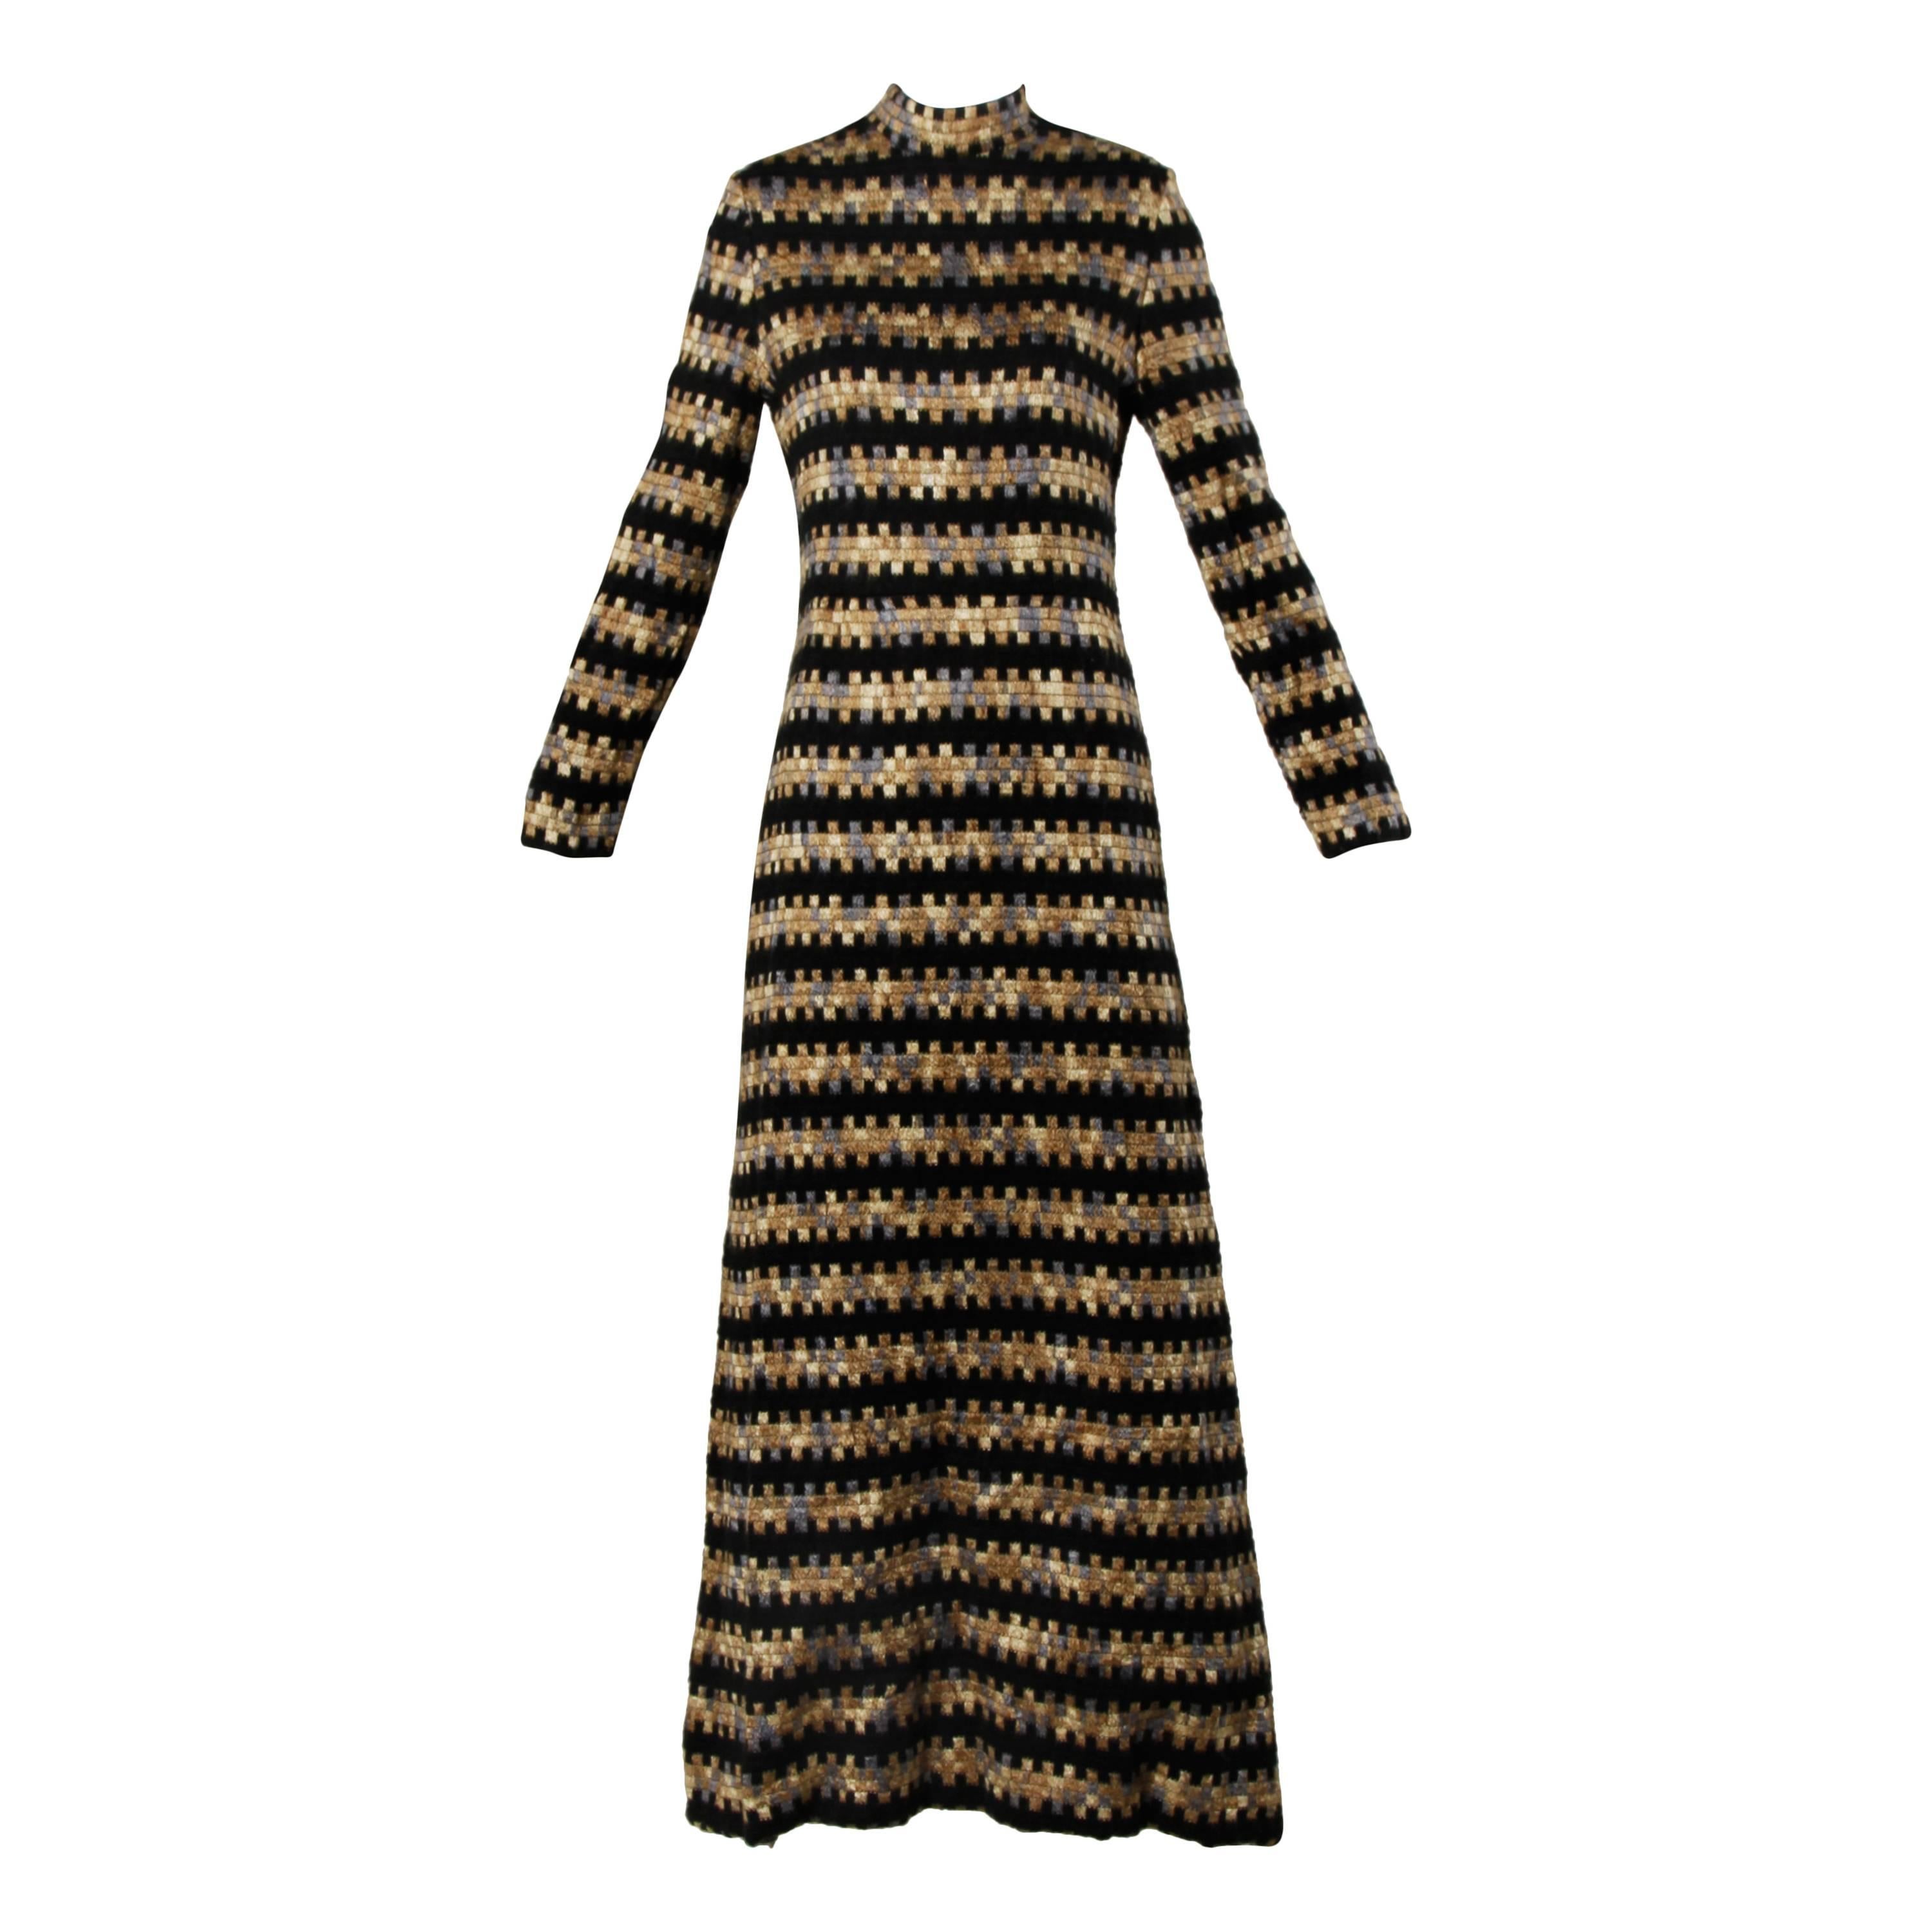 Ole Borden for Rembrandt Vintage 1970s Heavy Woven Maxi Dress